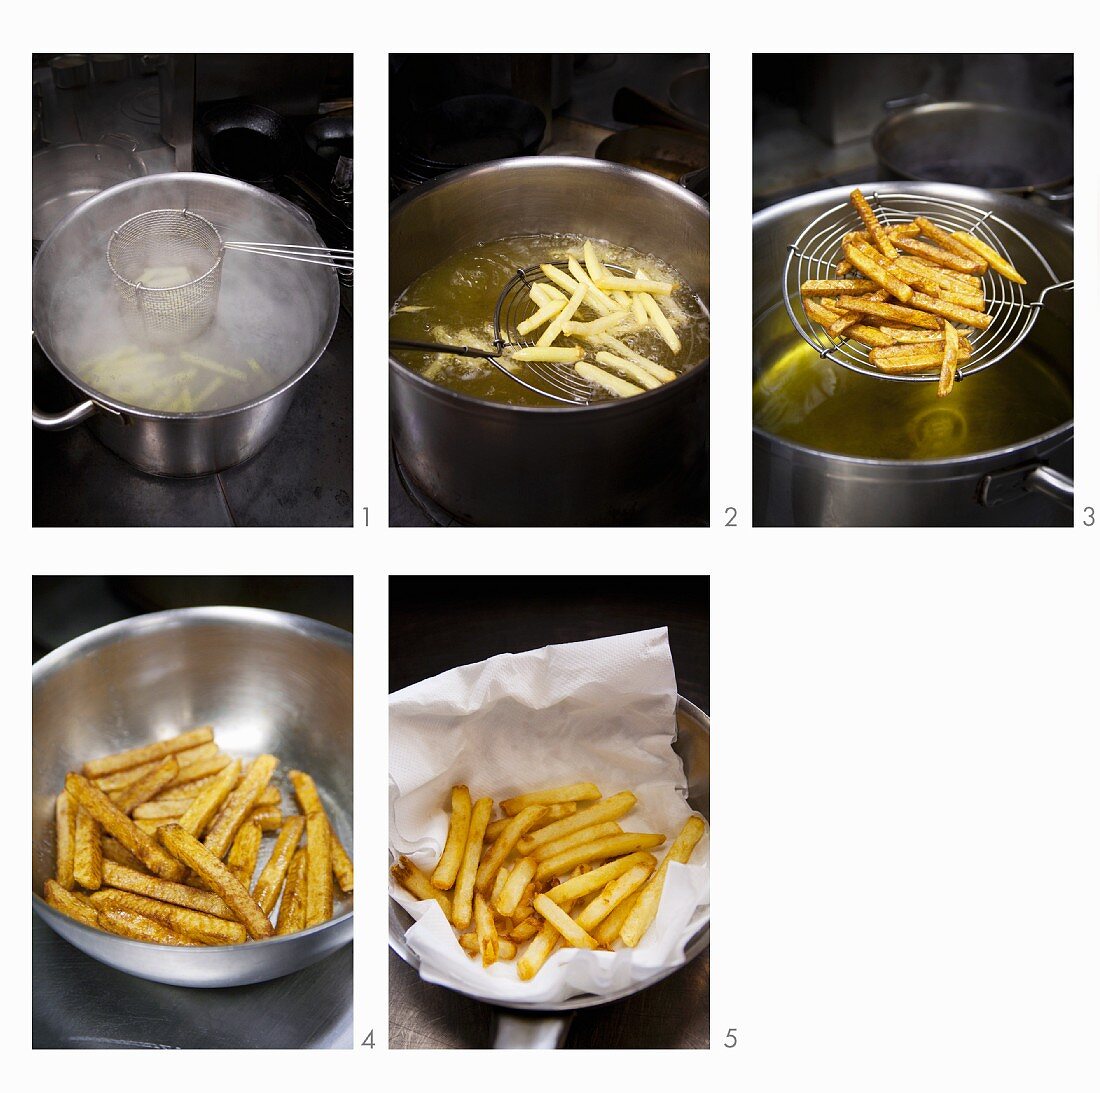 Chips being prepared